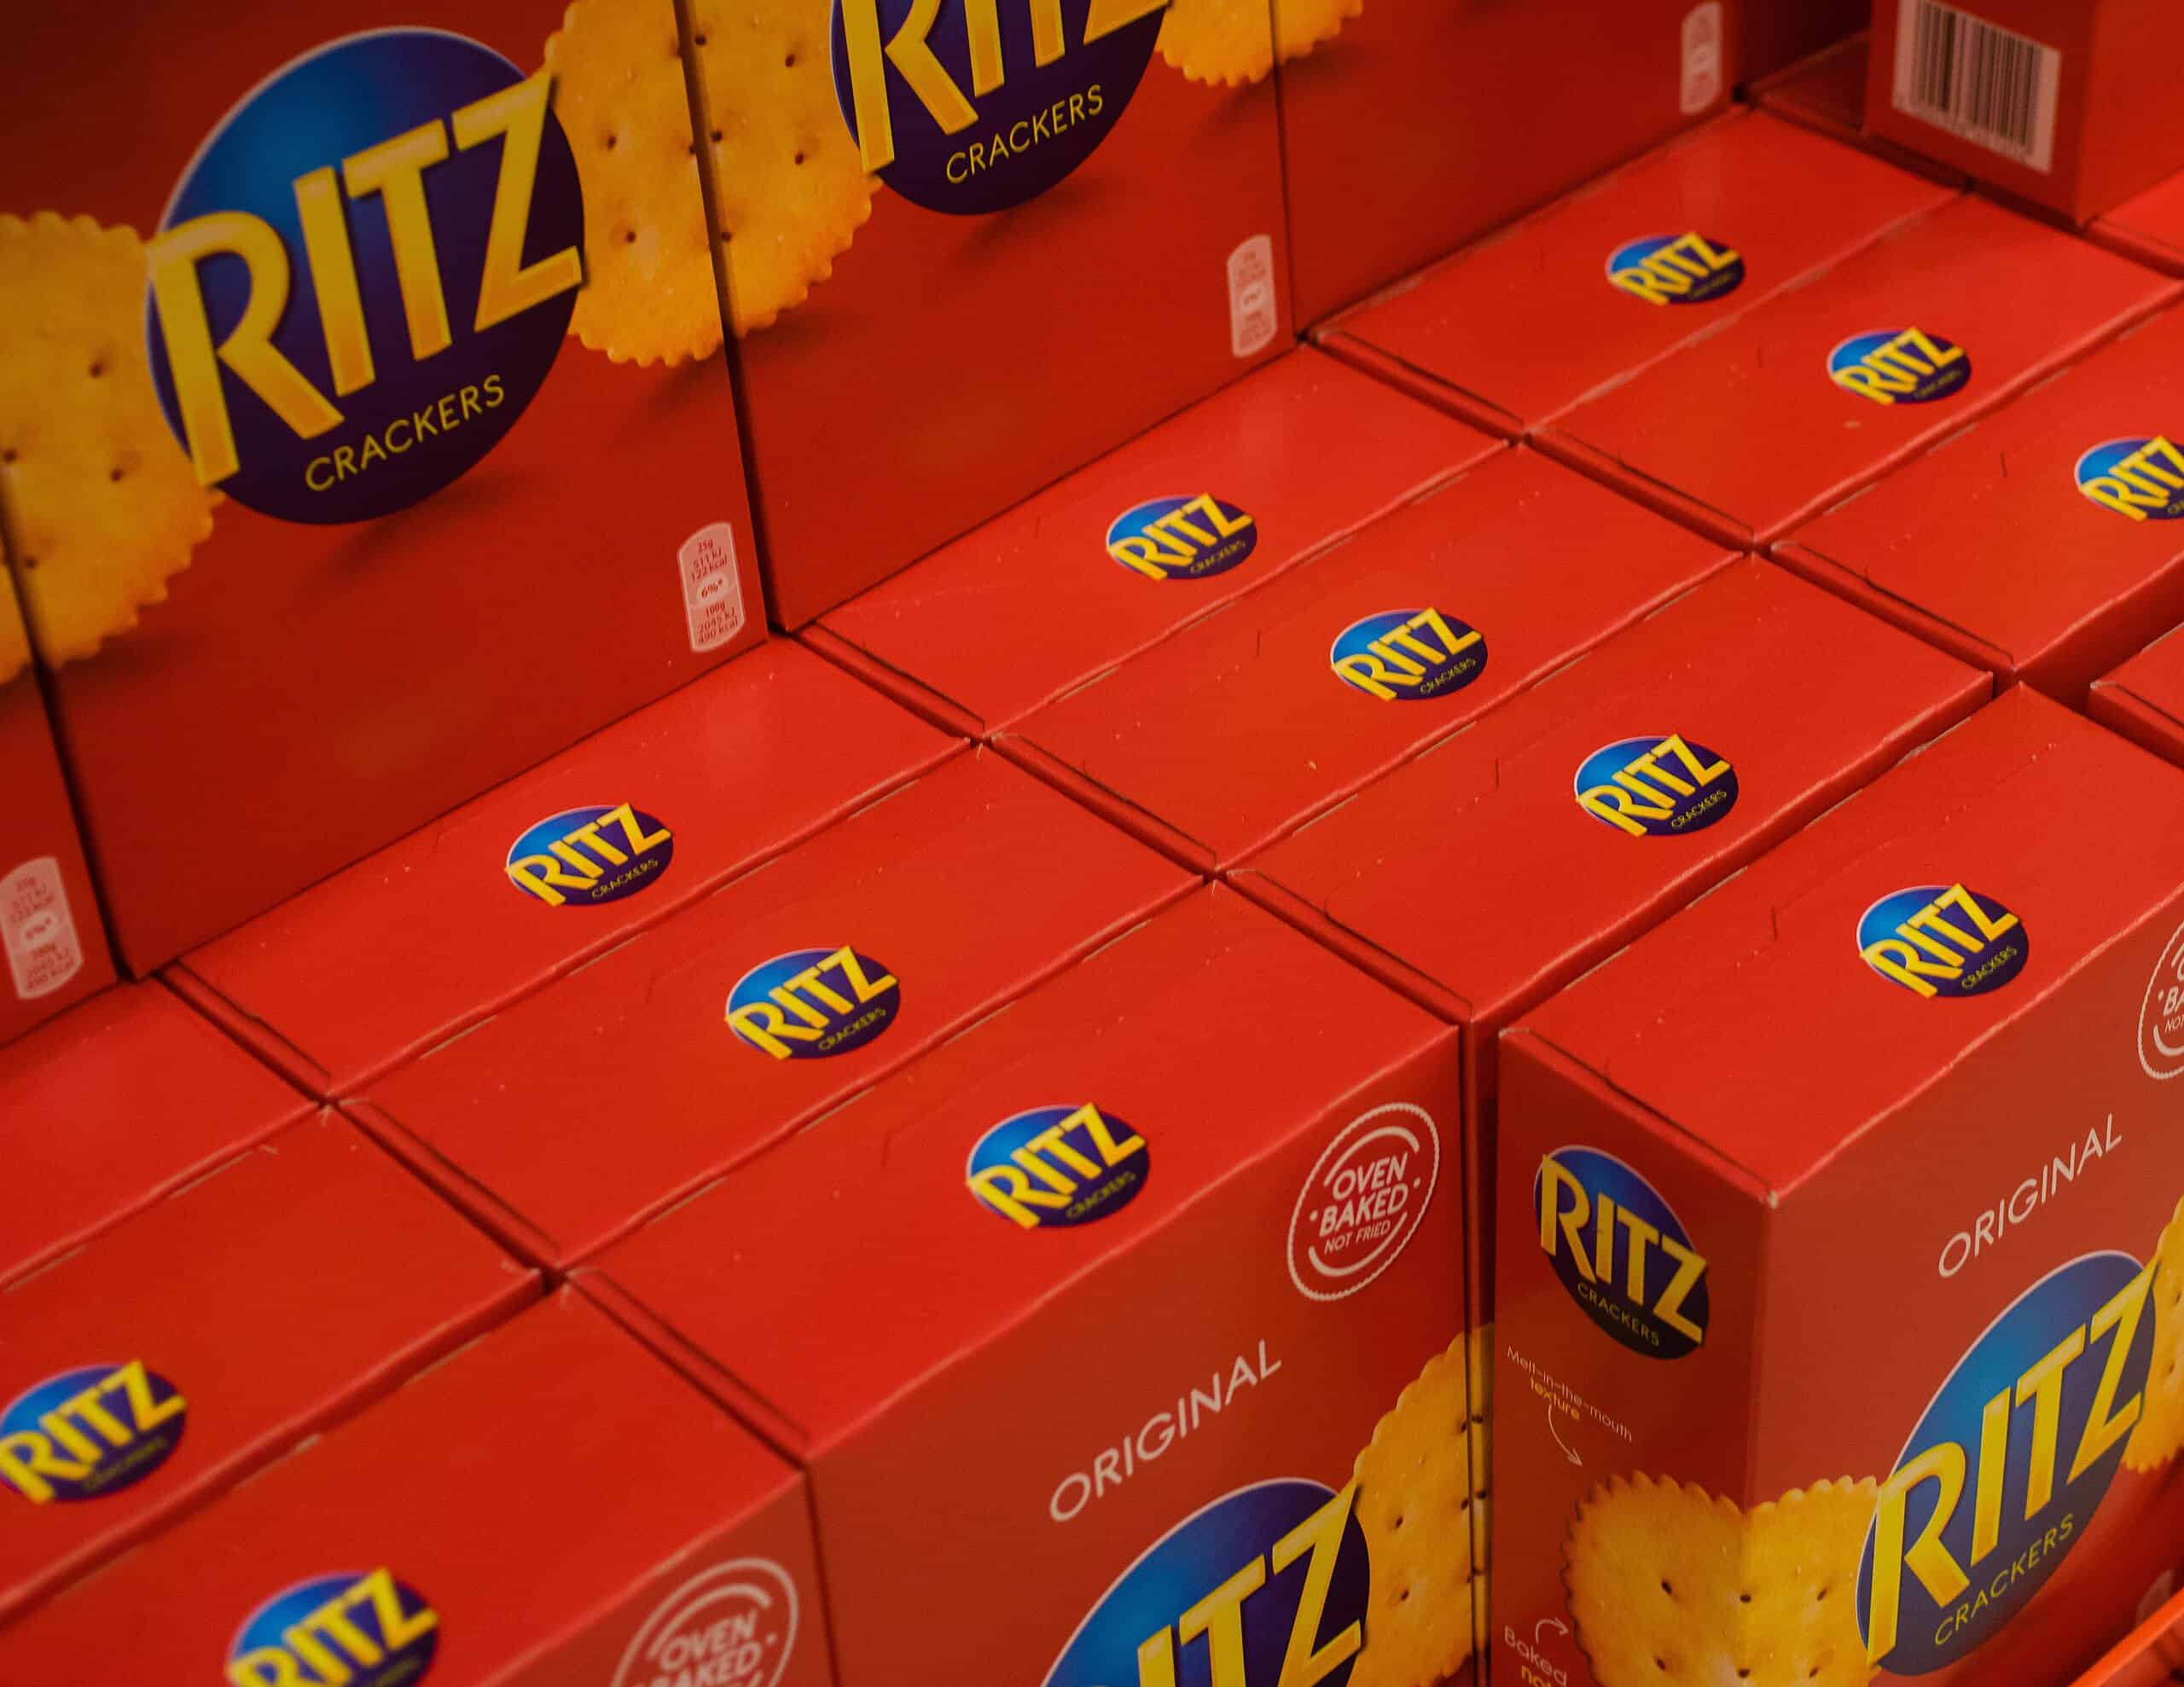 Ritz cracker boxes